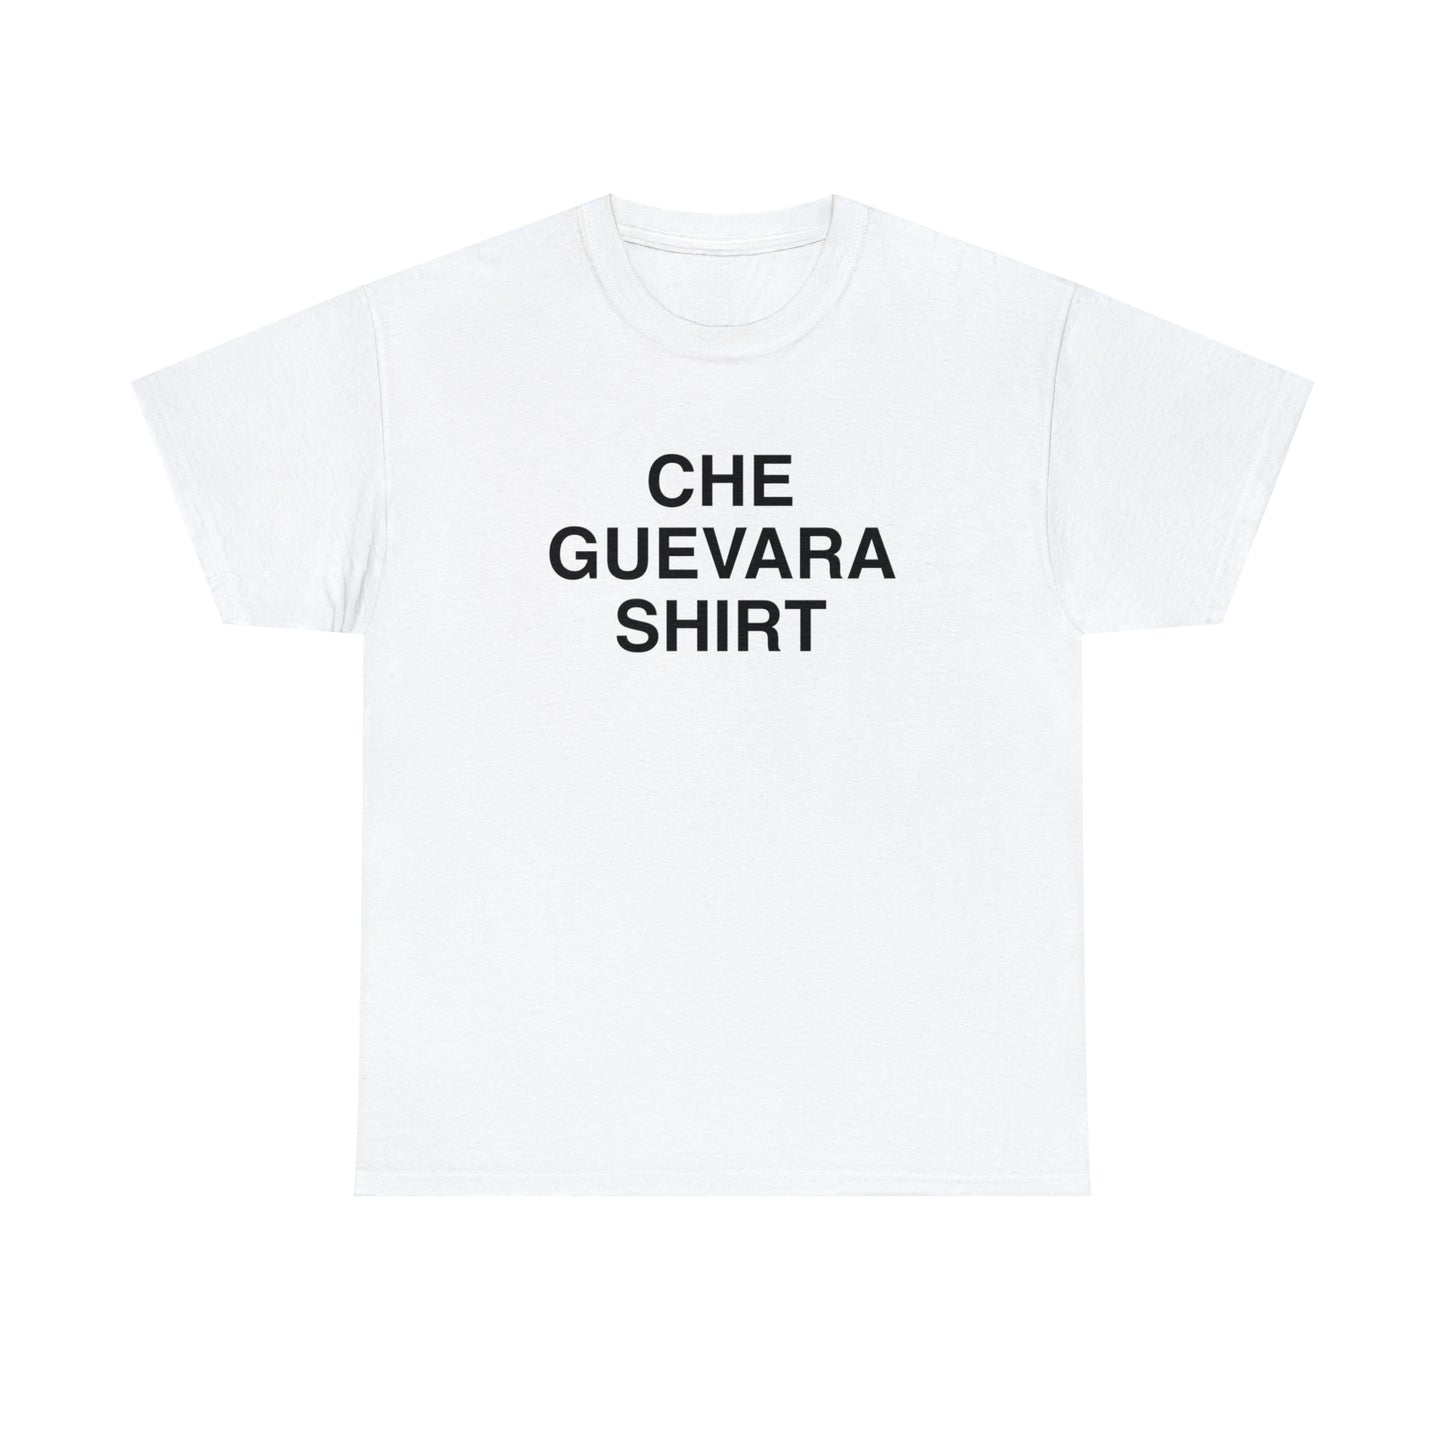 Che Guevara Shirt.